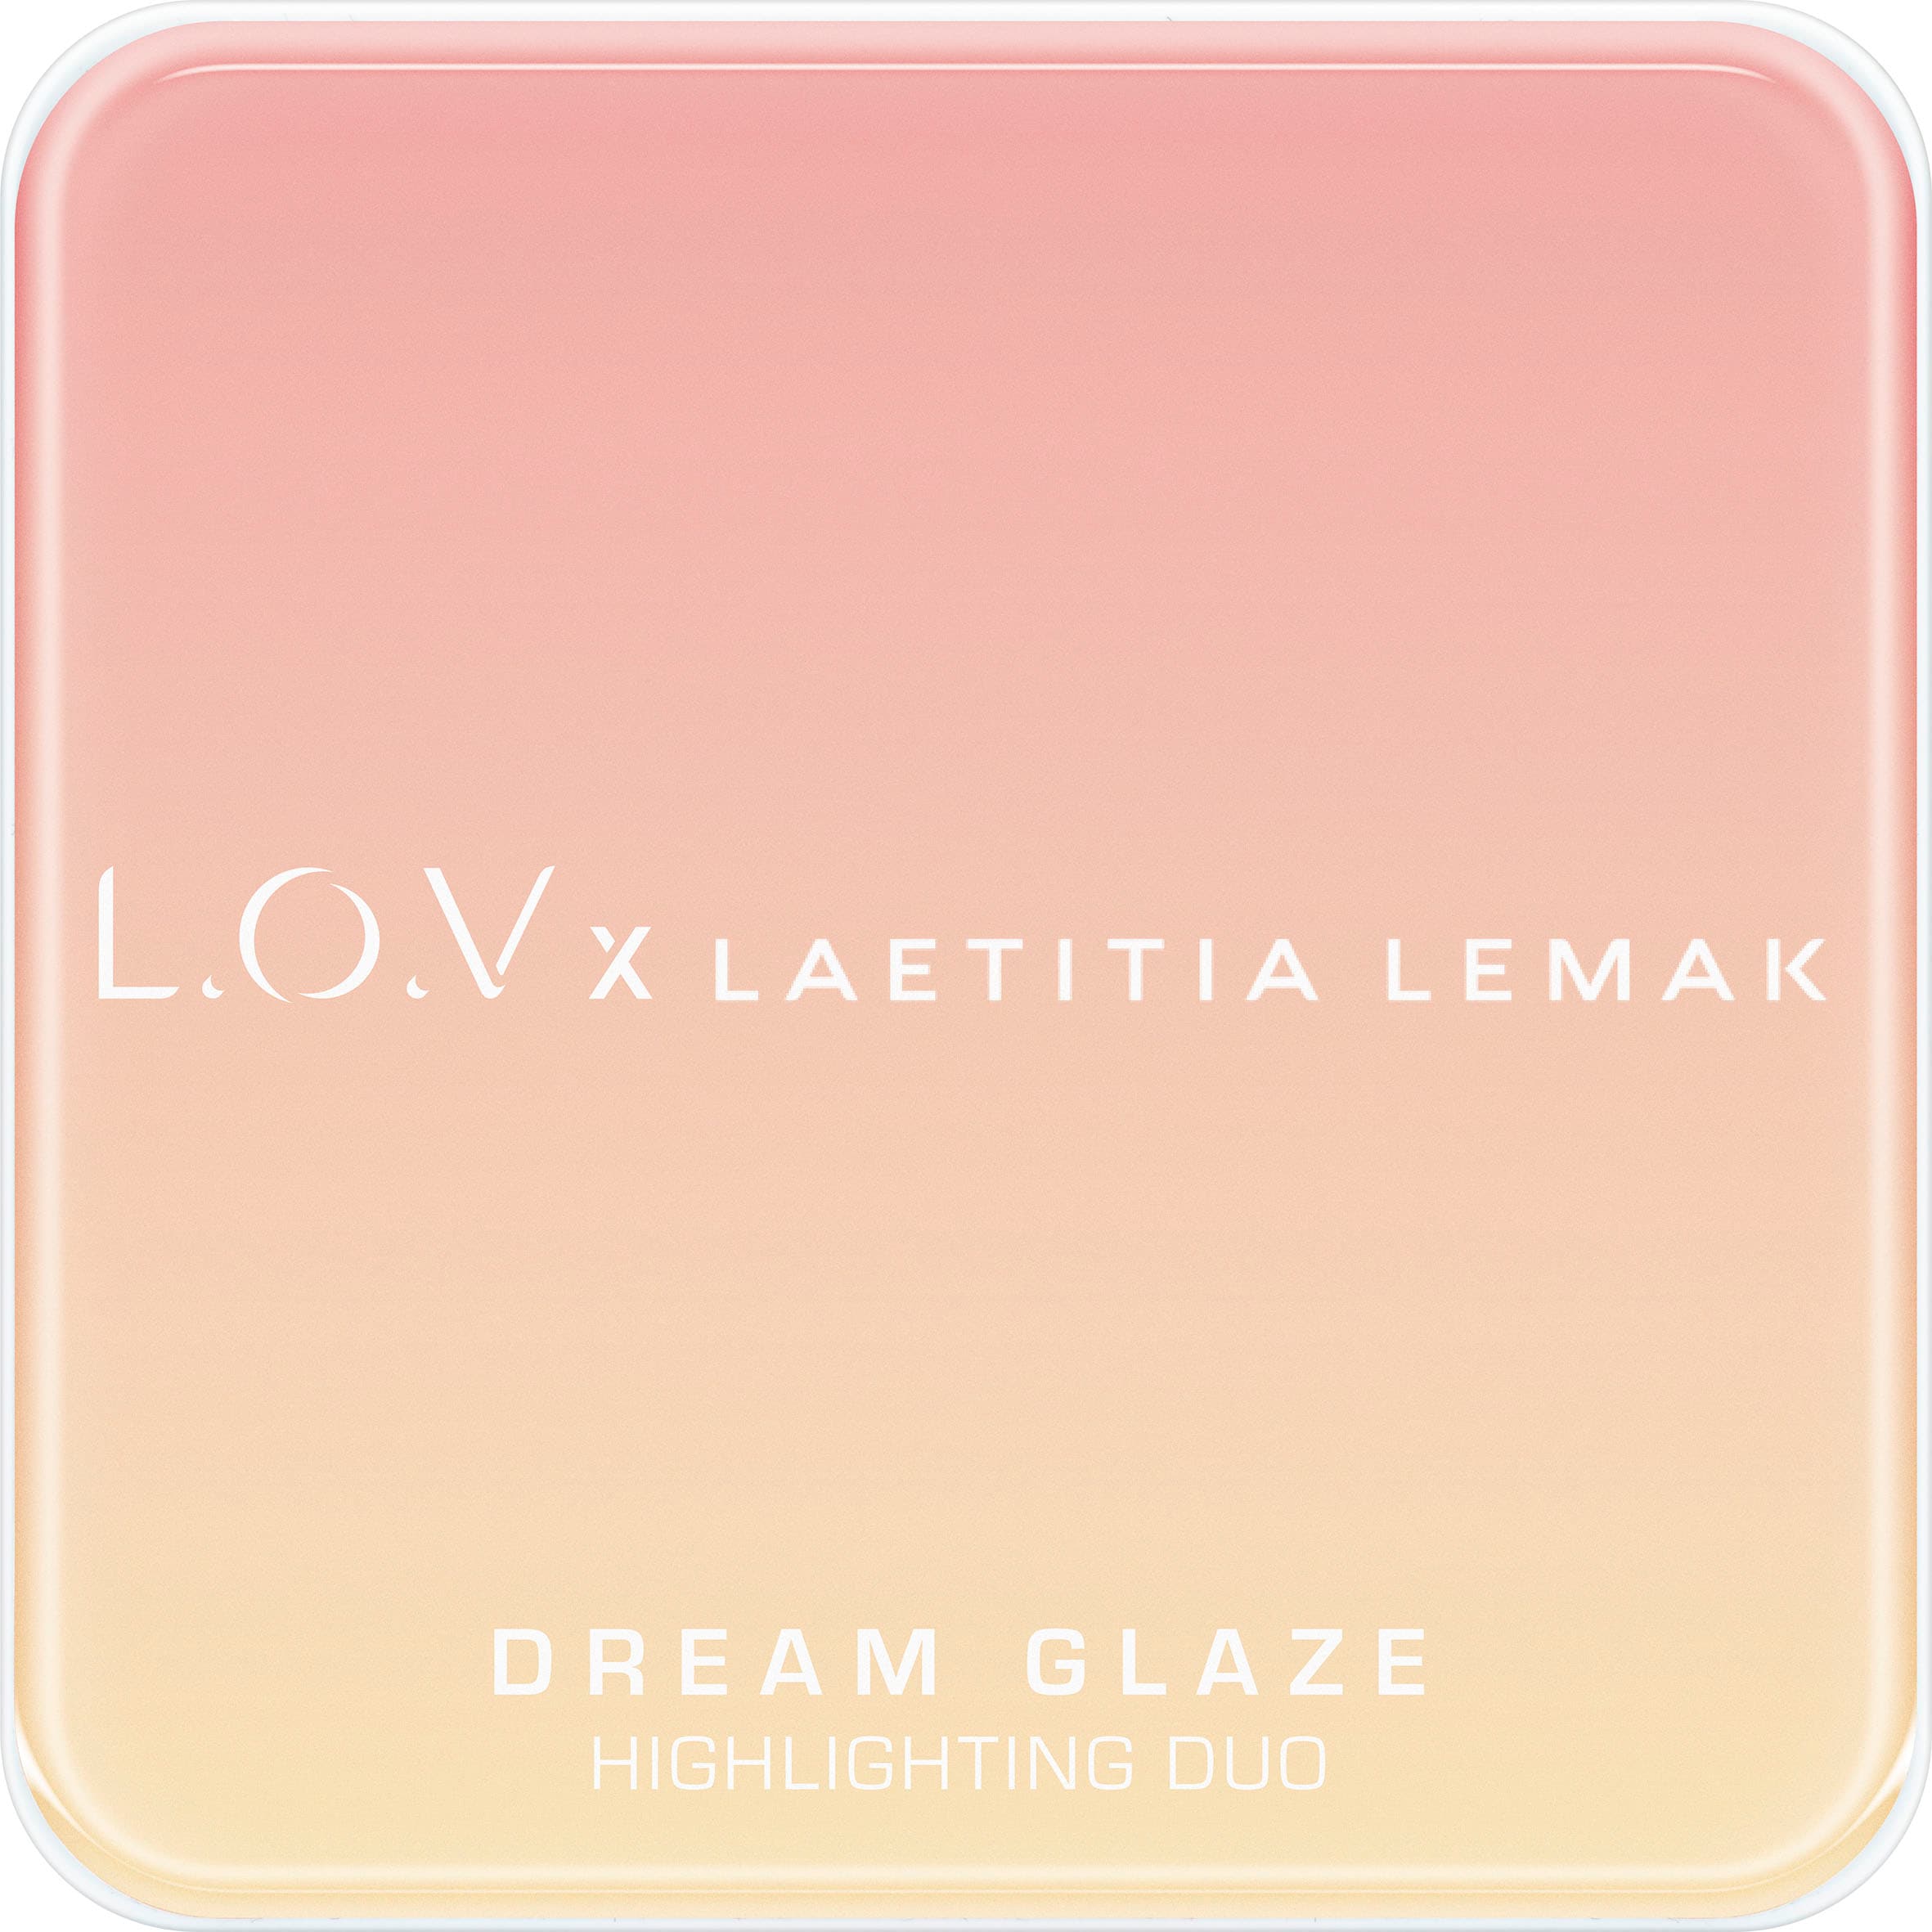 L.O.V Highlighter-Palette online kaufen LEMAK Highlighting Duo« LAETITIA GLAZE x »L.O.V DREAM